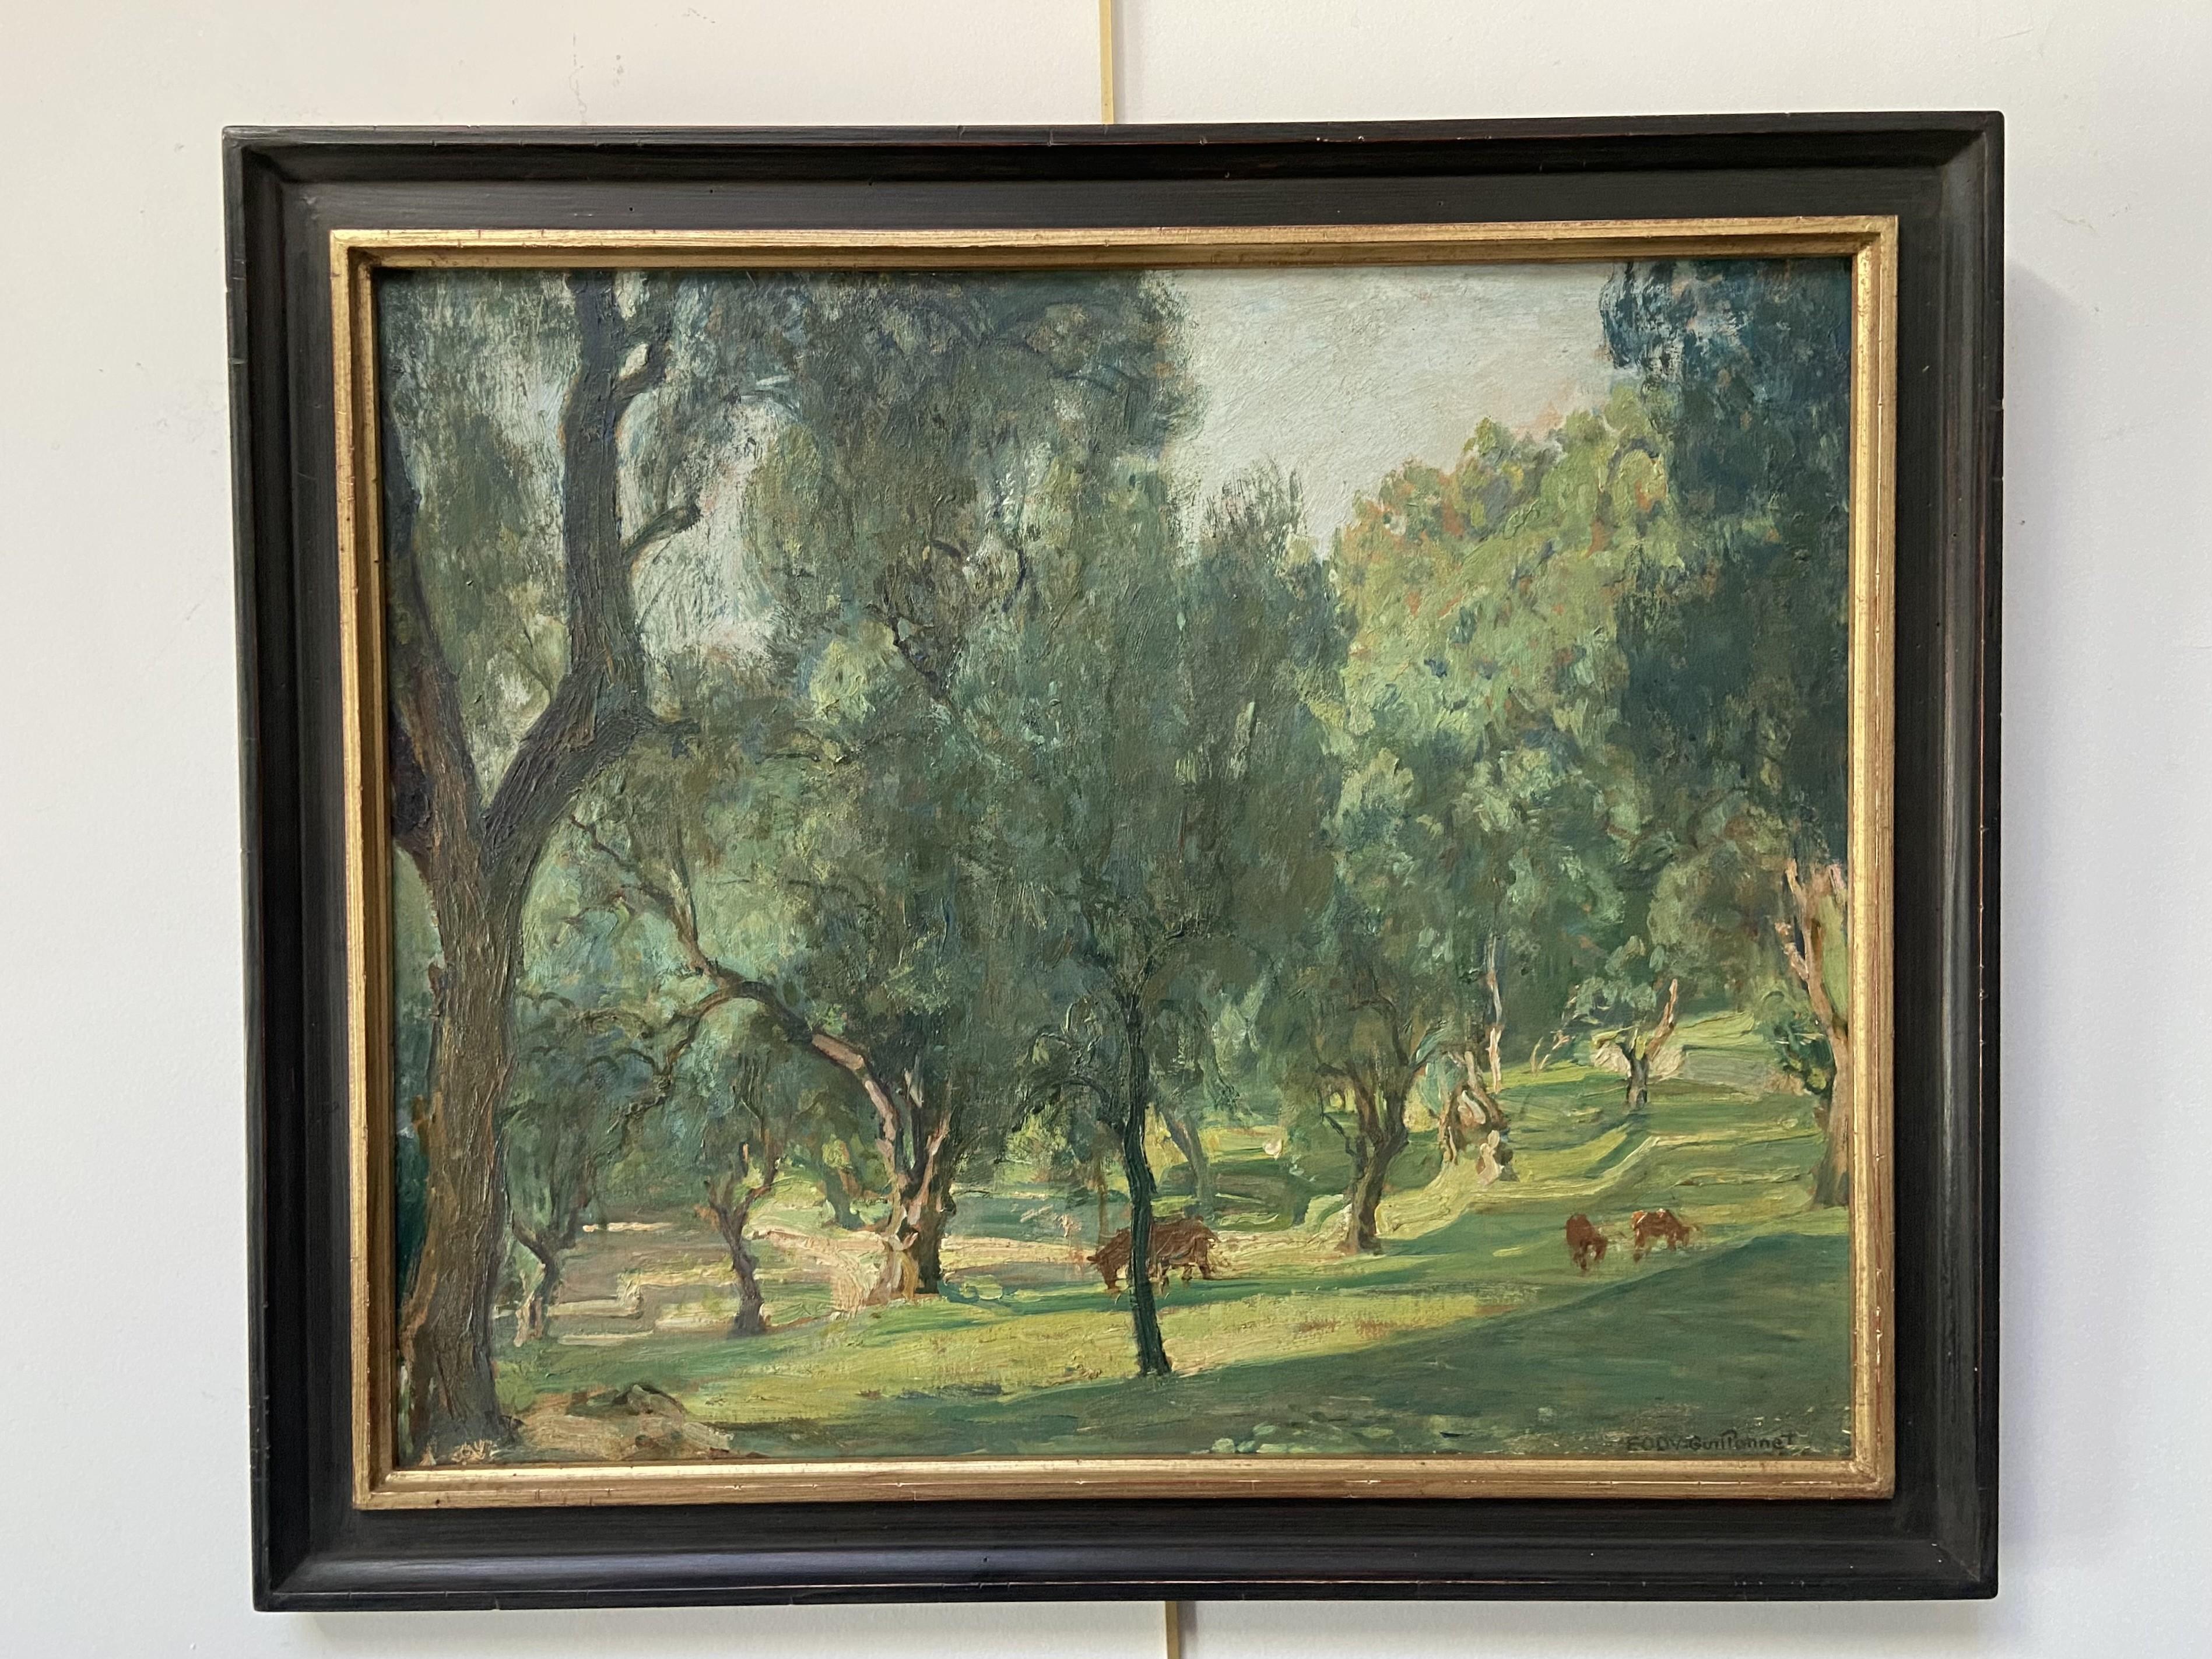 Octave Denis Victor Guillonnet (1872 - 1967) 
Les Oliviers, A landscape with olive trees
signed 